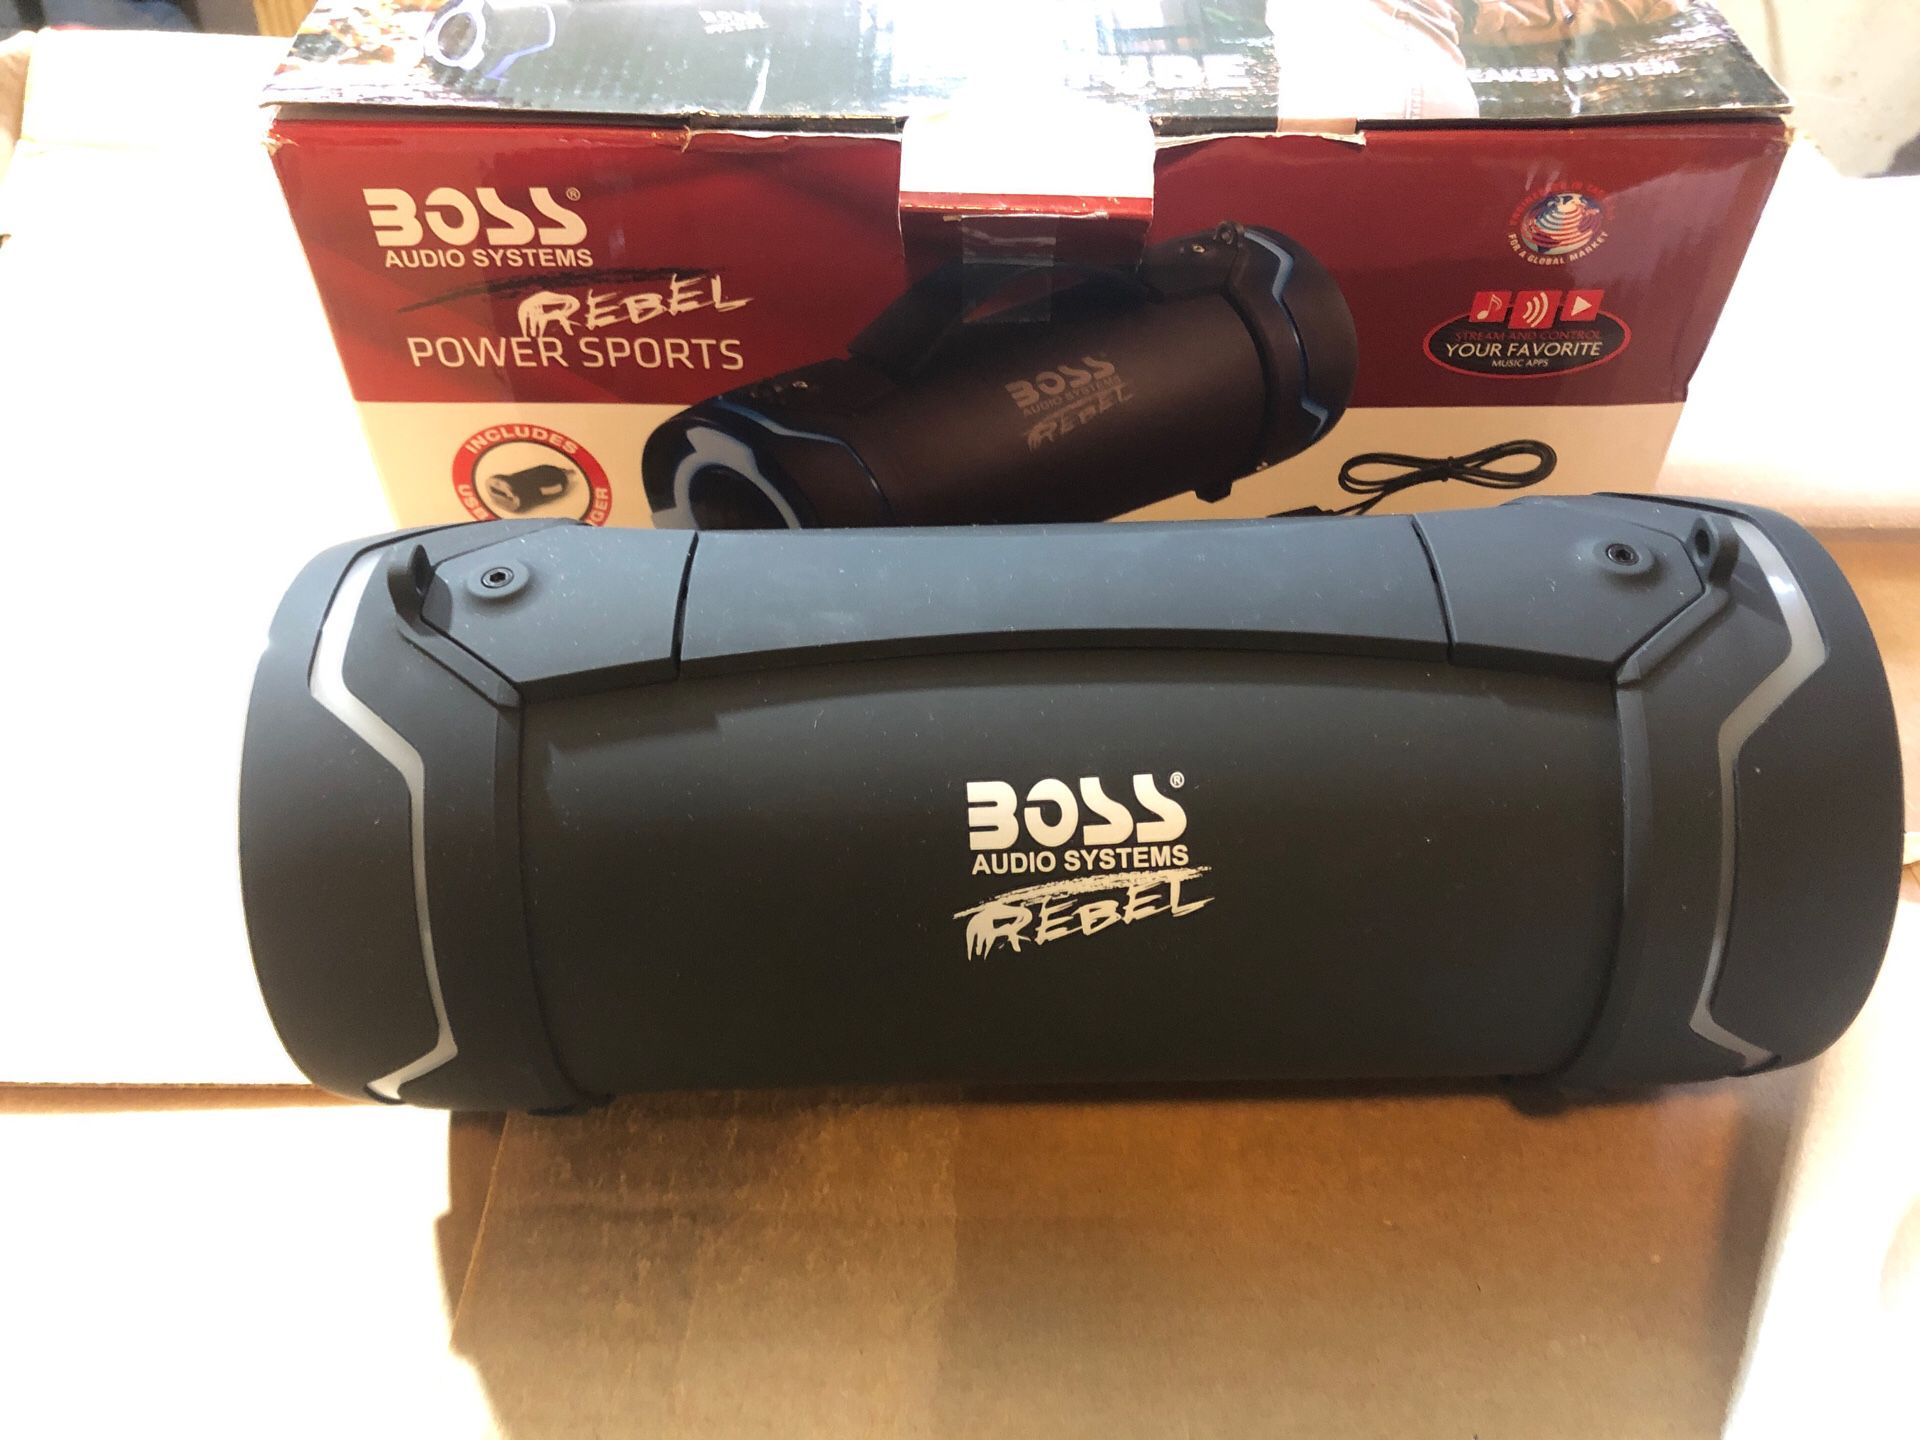 Boss audio rebel power sports Bluetooth speaker opened box